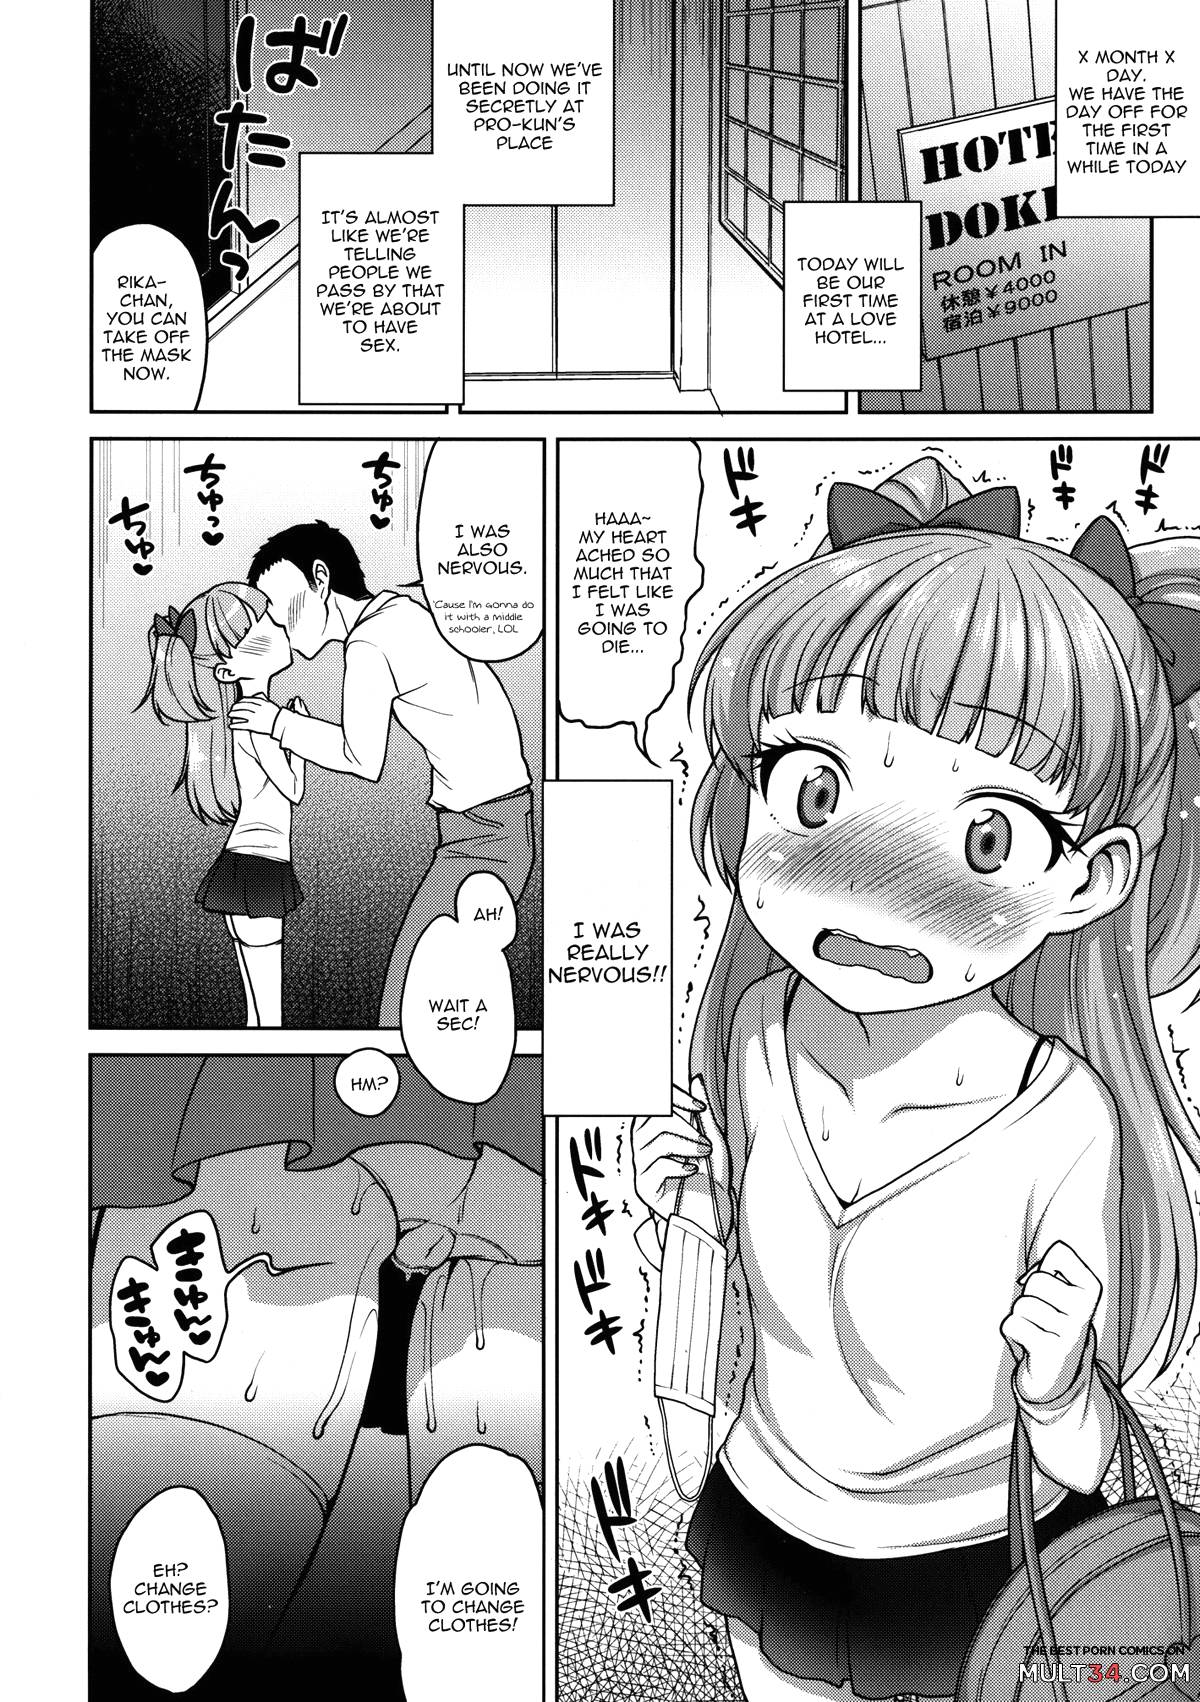 Rika-chan Kawaii page 15